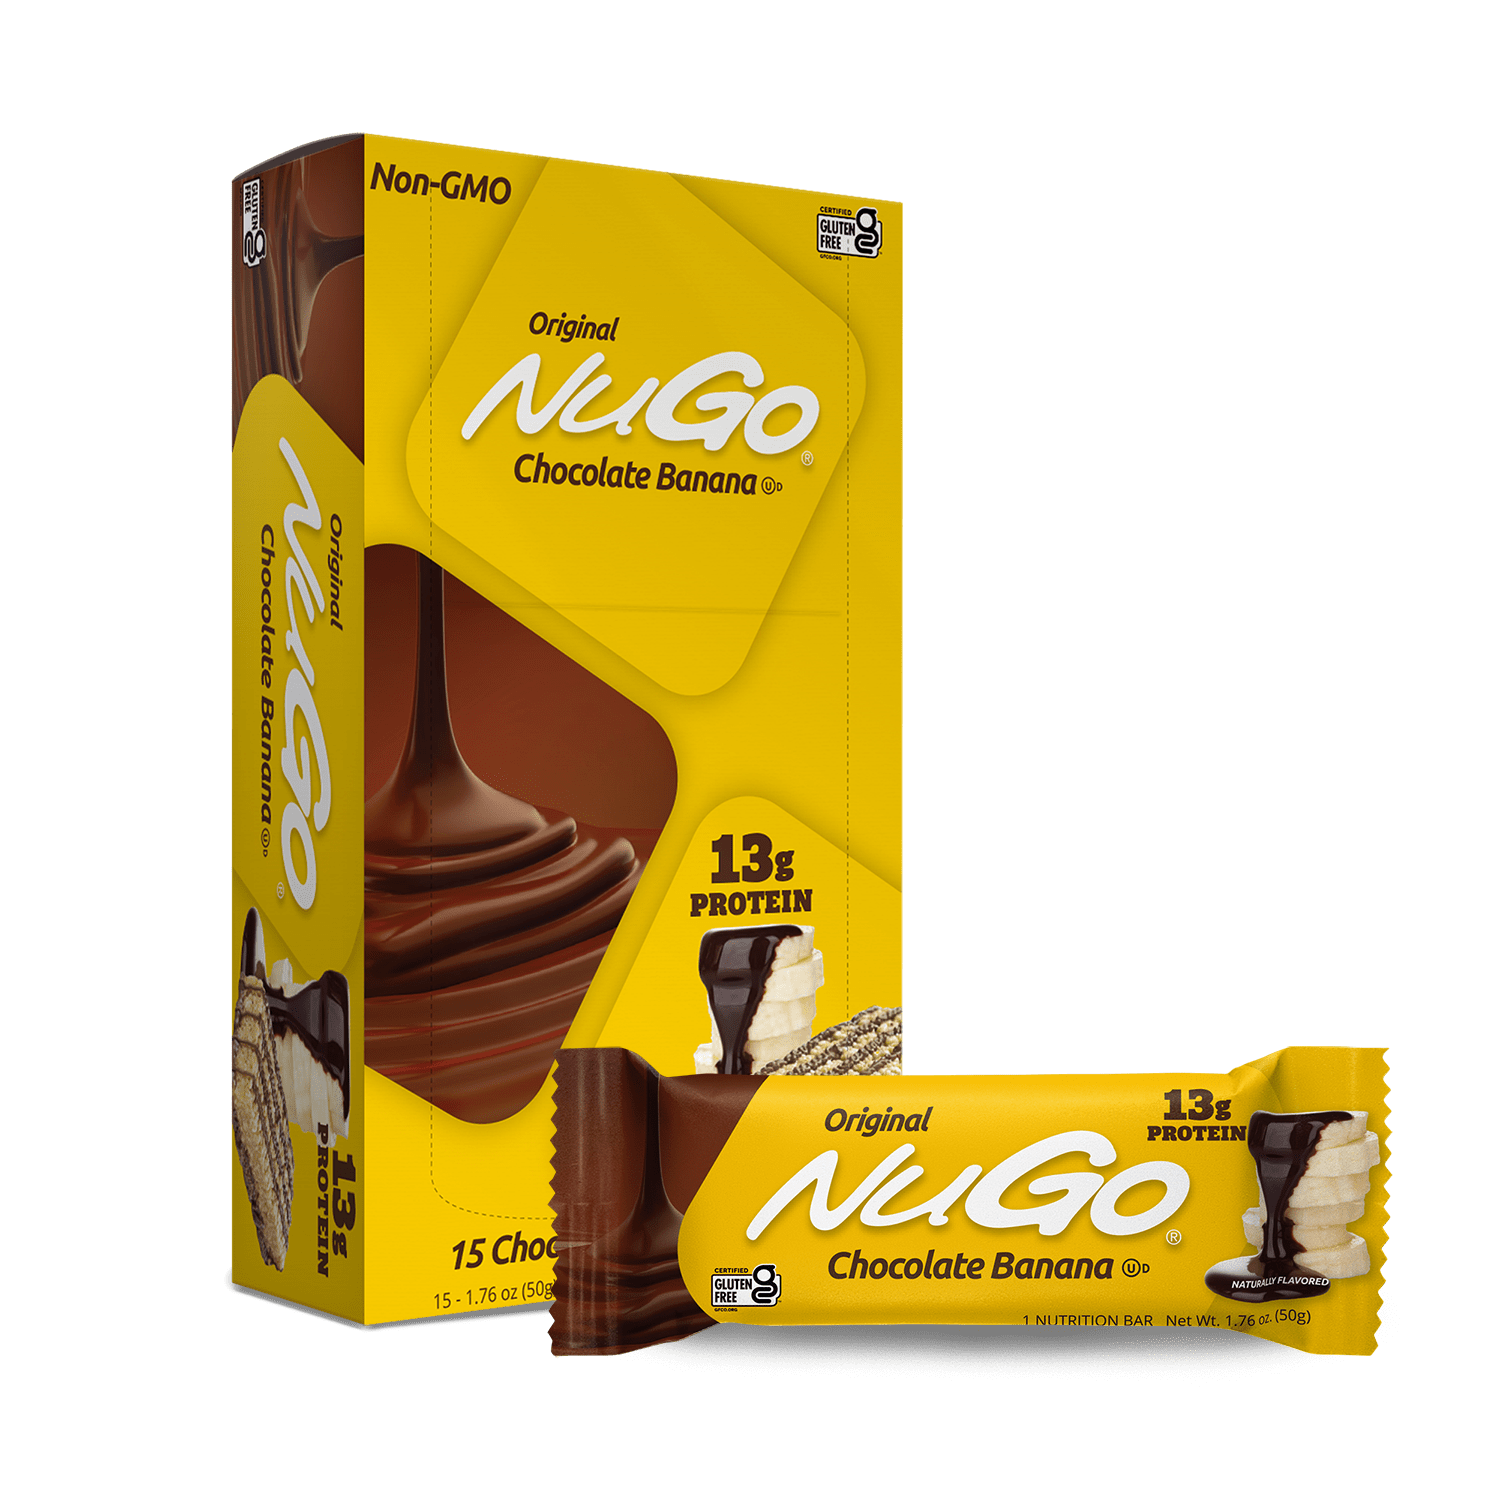 NuGo Original Chocolate Banana Bar and Box